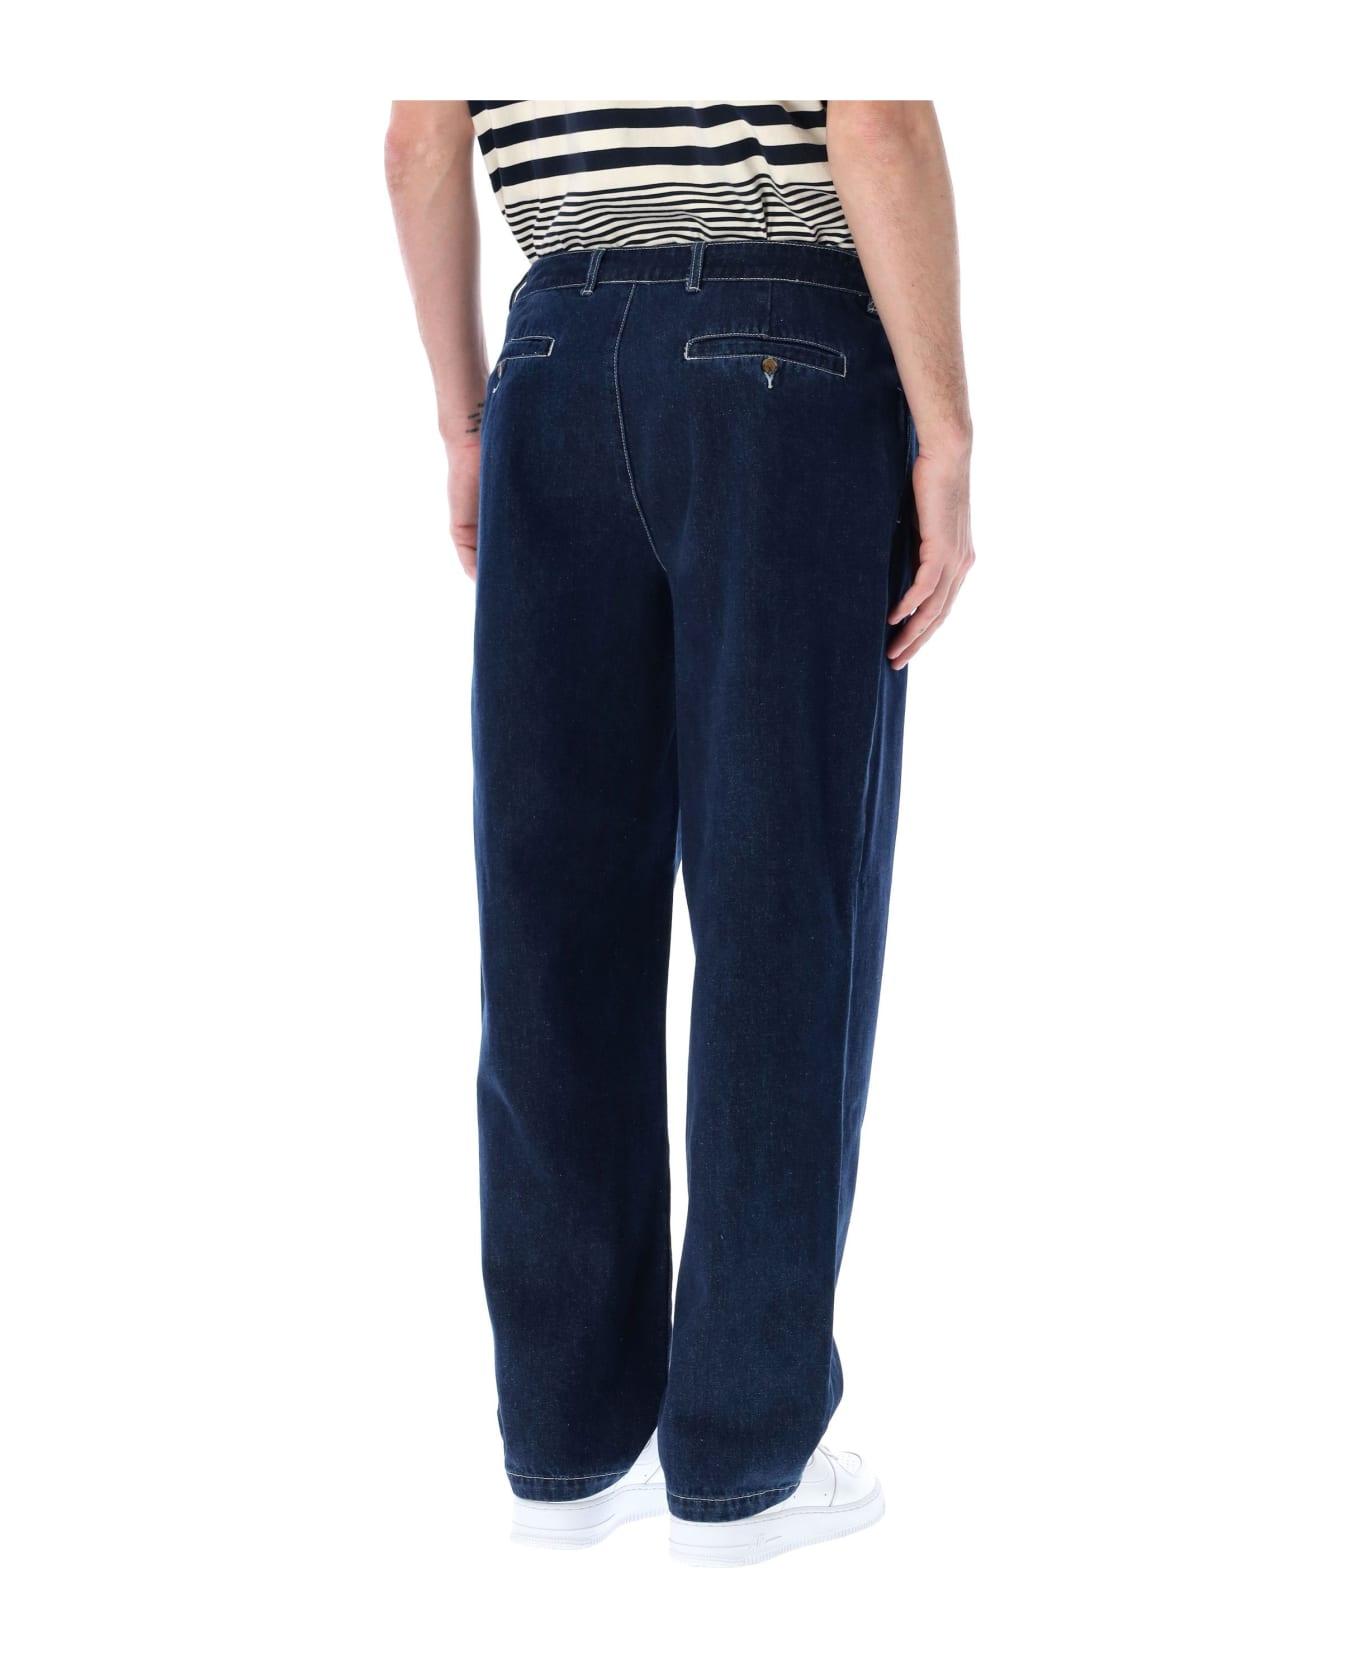 Pop Trading Company Pop Hewitt Suit Pants - DARK BLUE